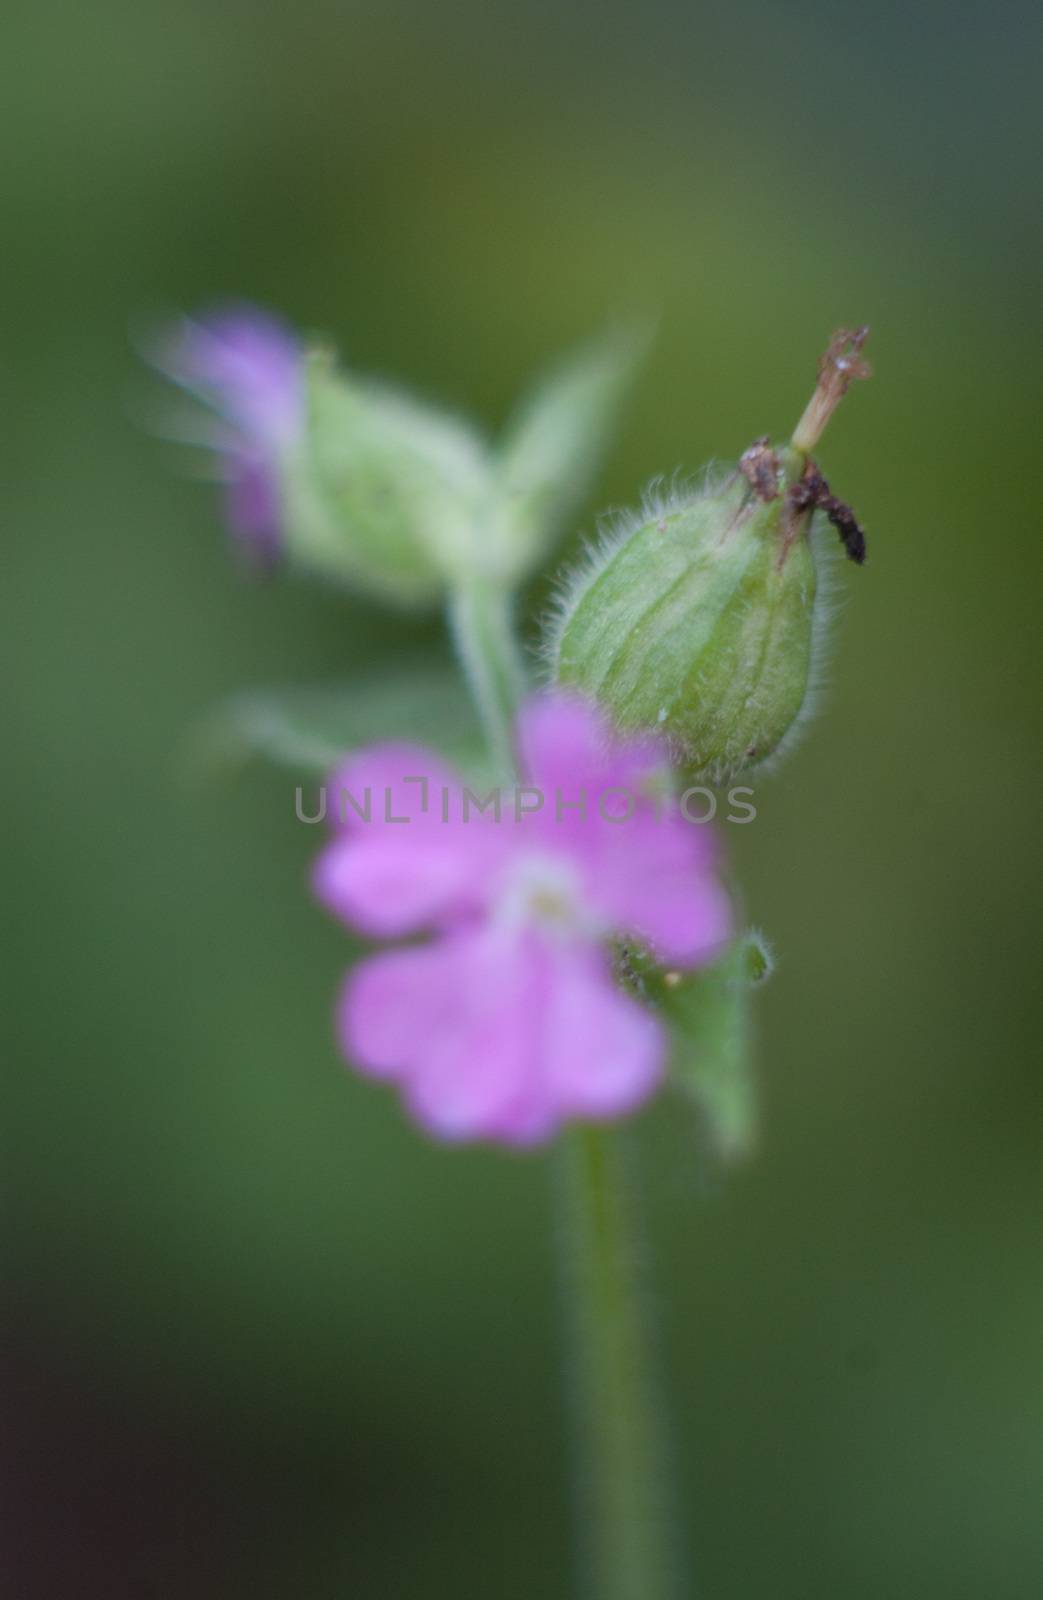 ants on flower by medsofoto